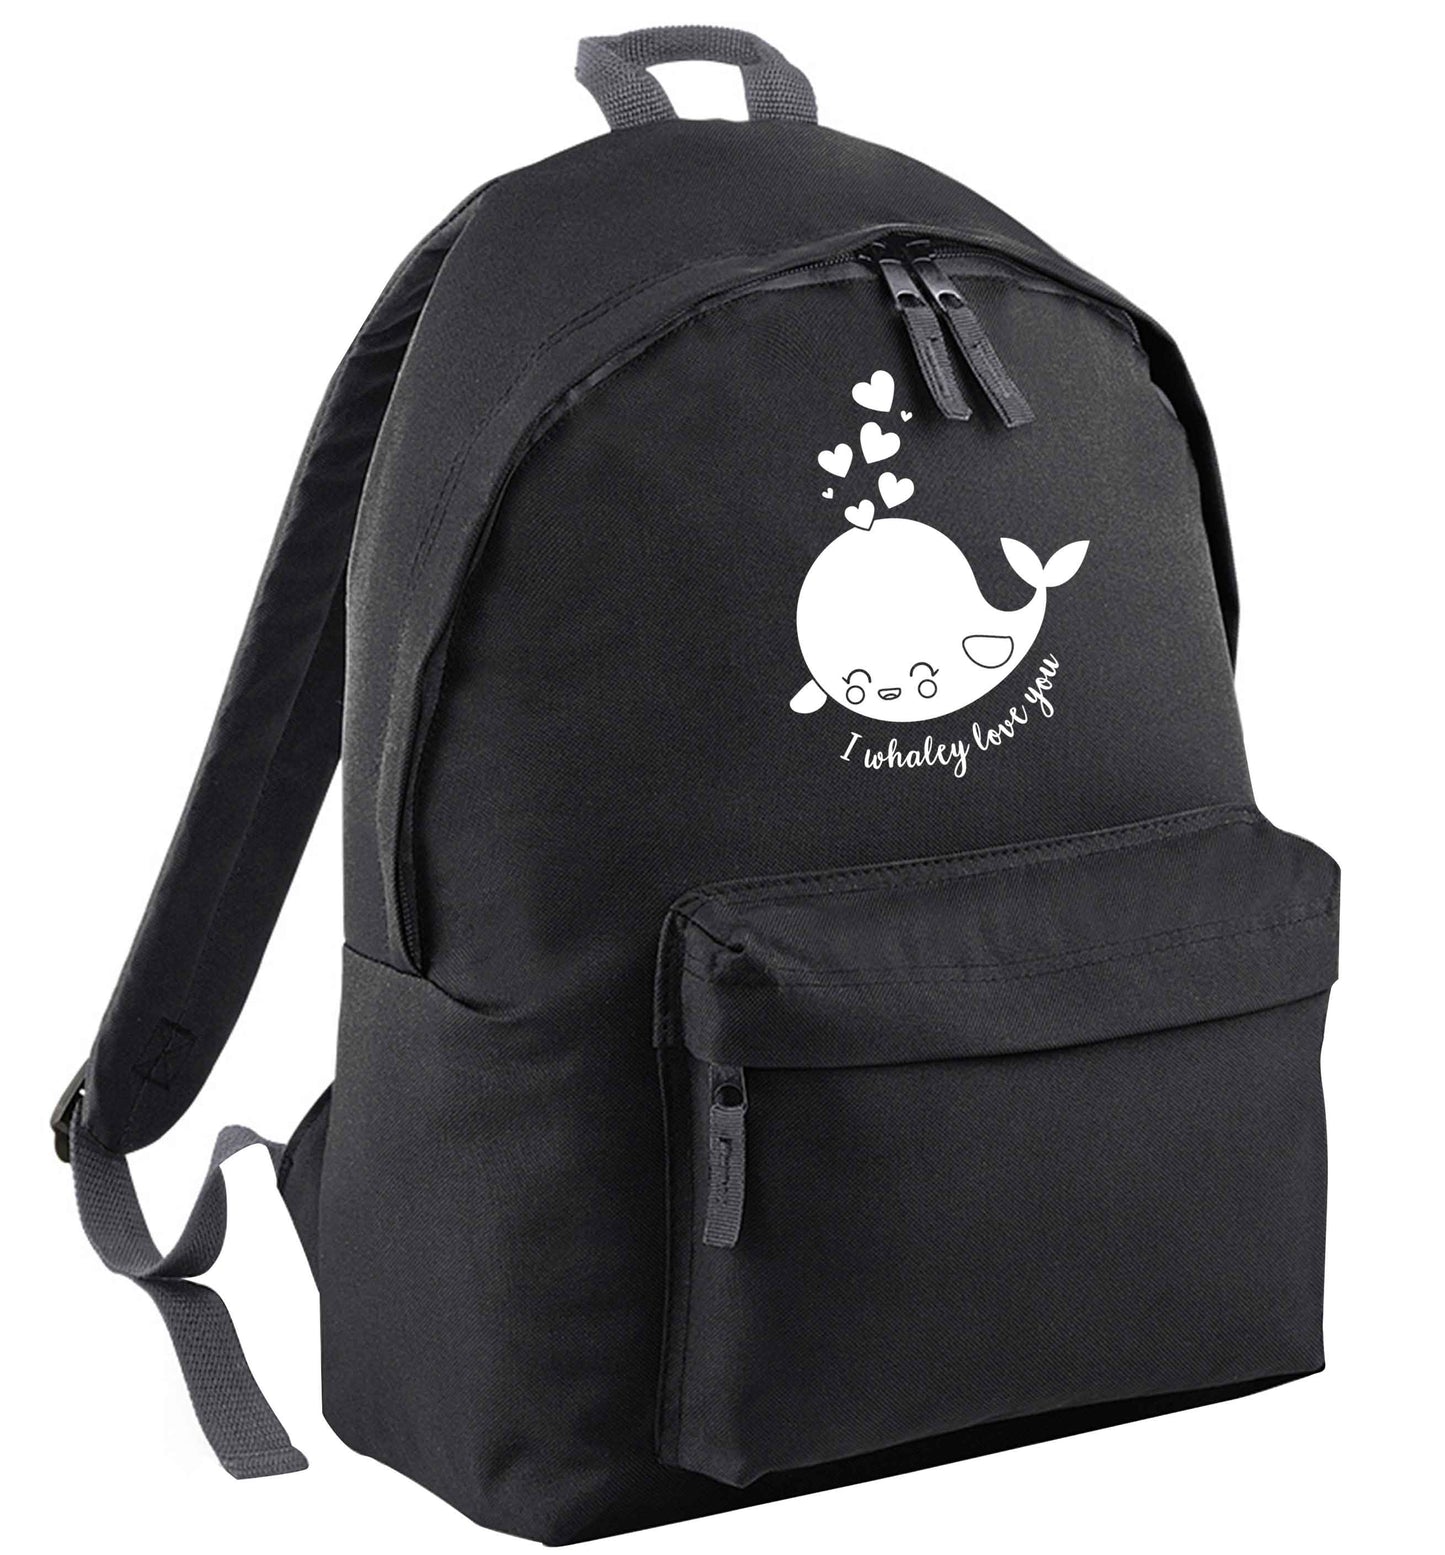 I whaley love you | Children's backpack